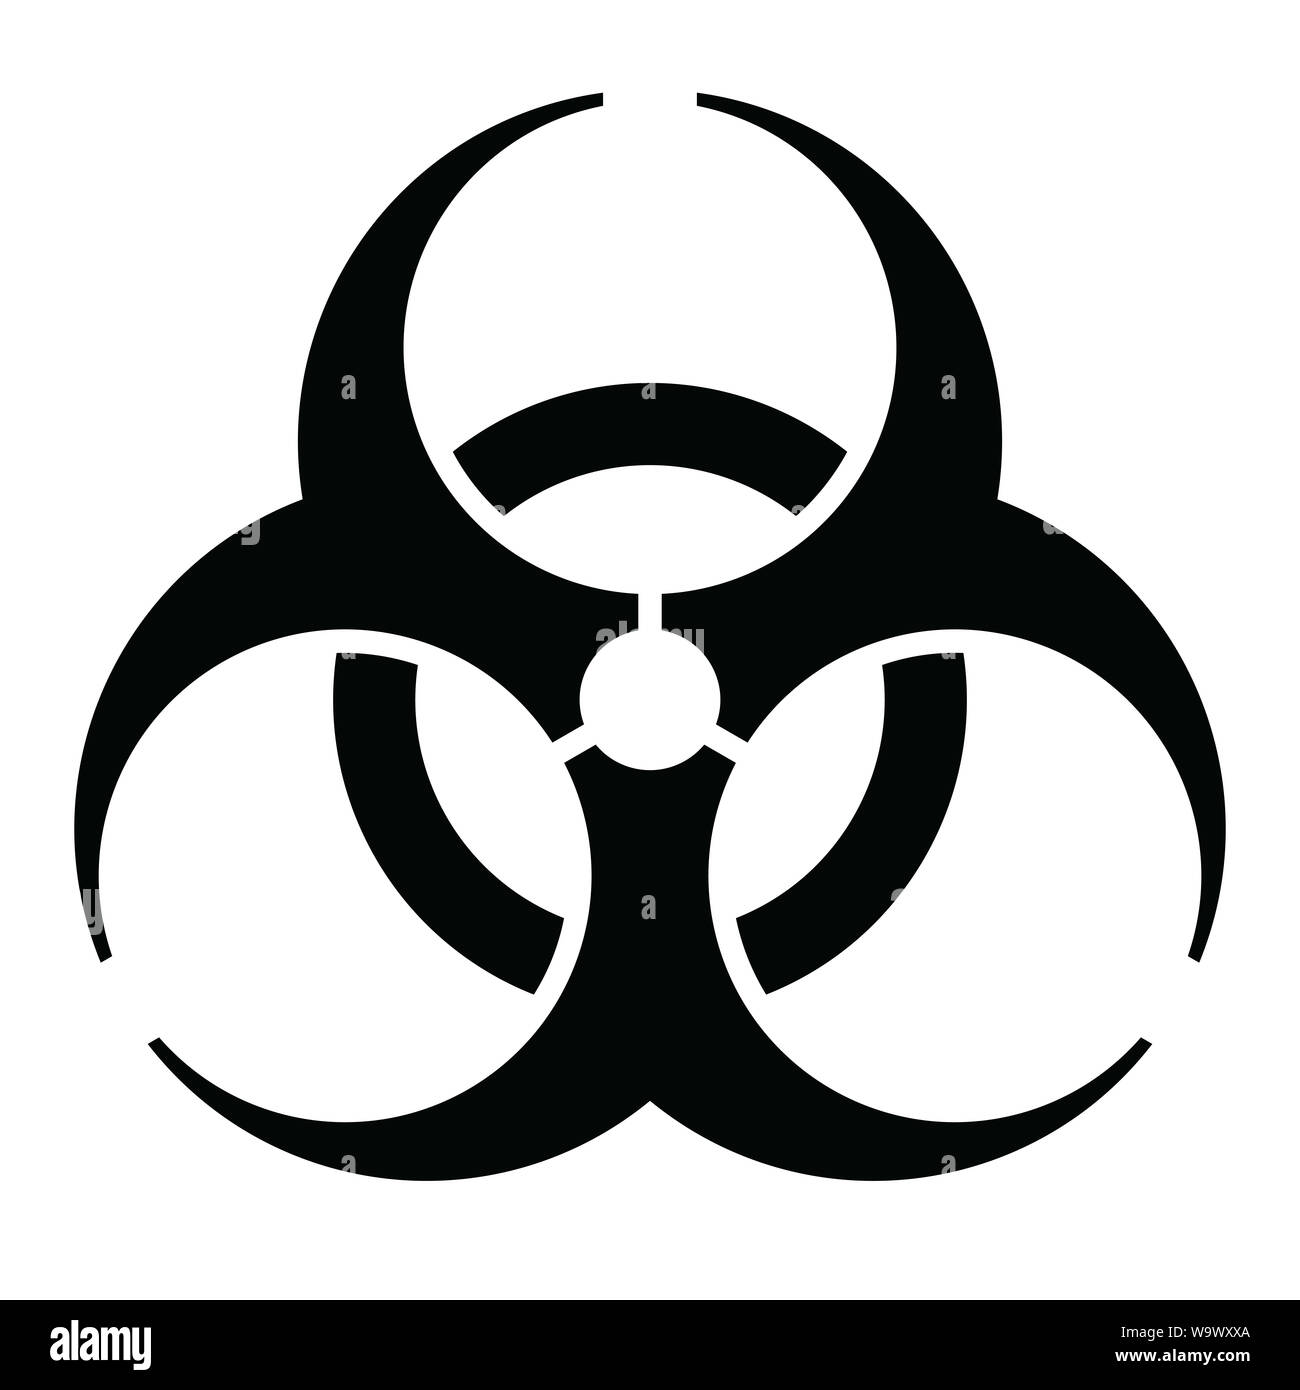 Biohazard symbol 2 Stock Photo